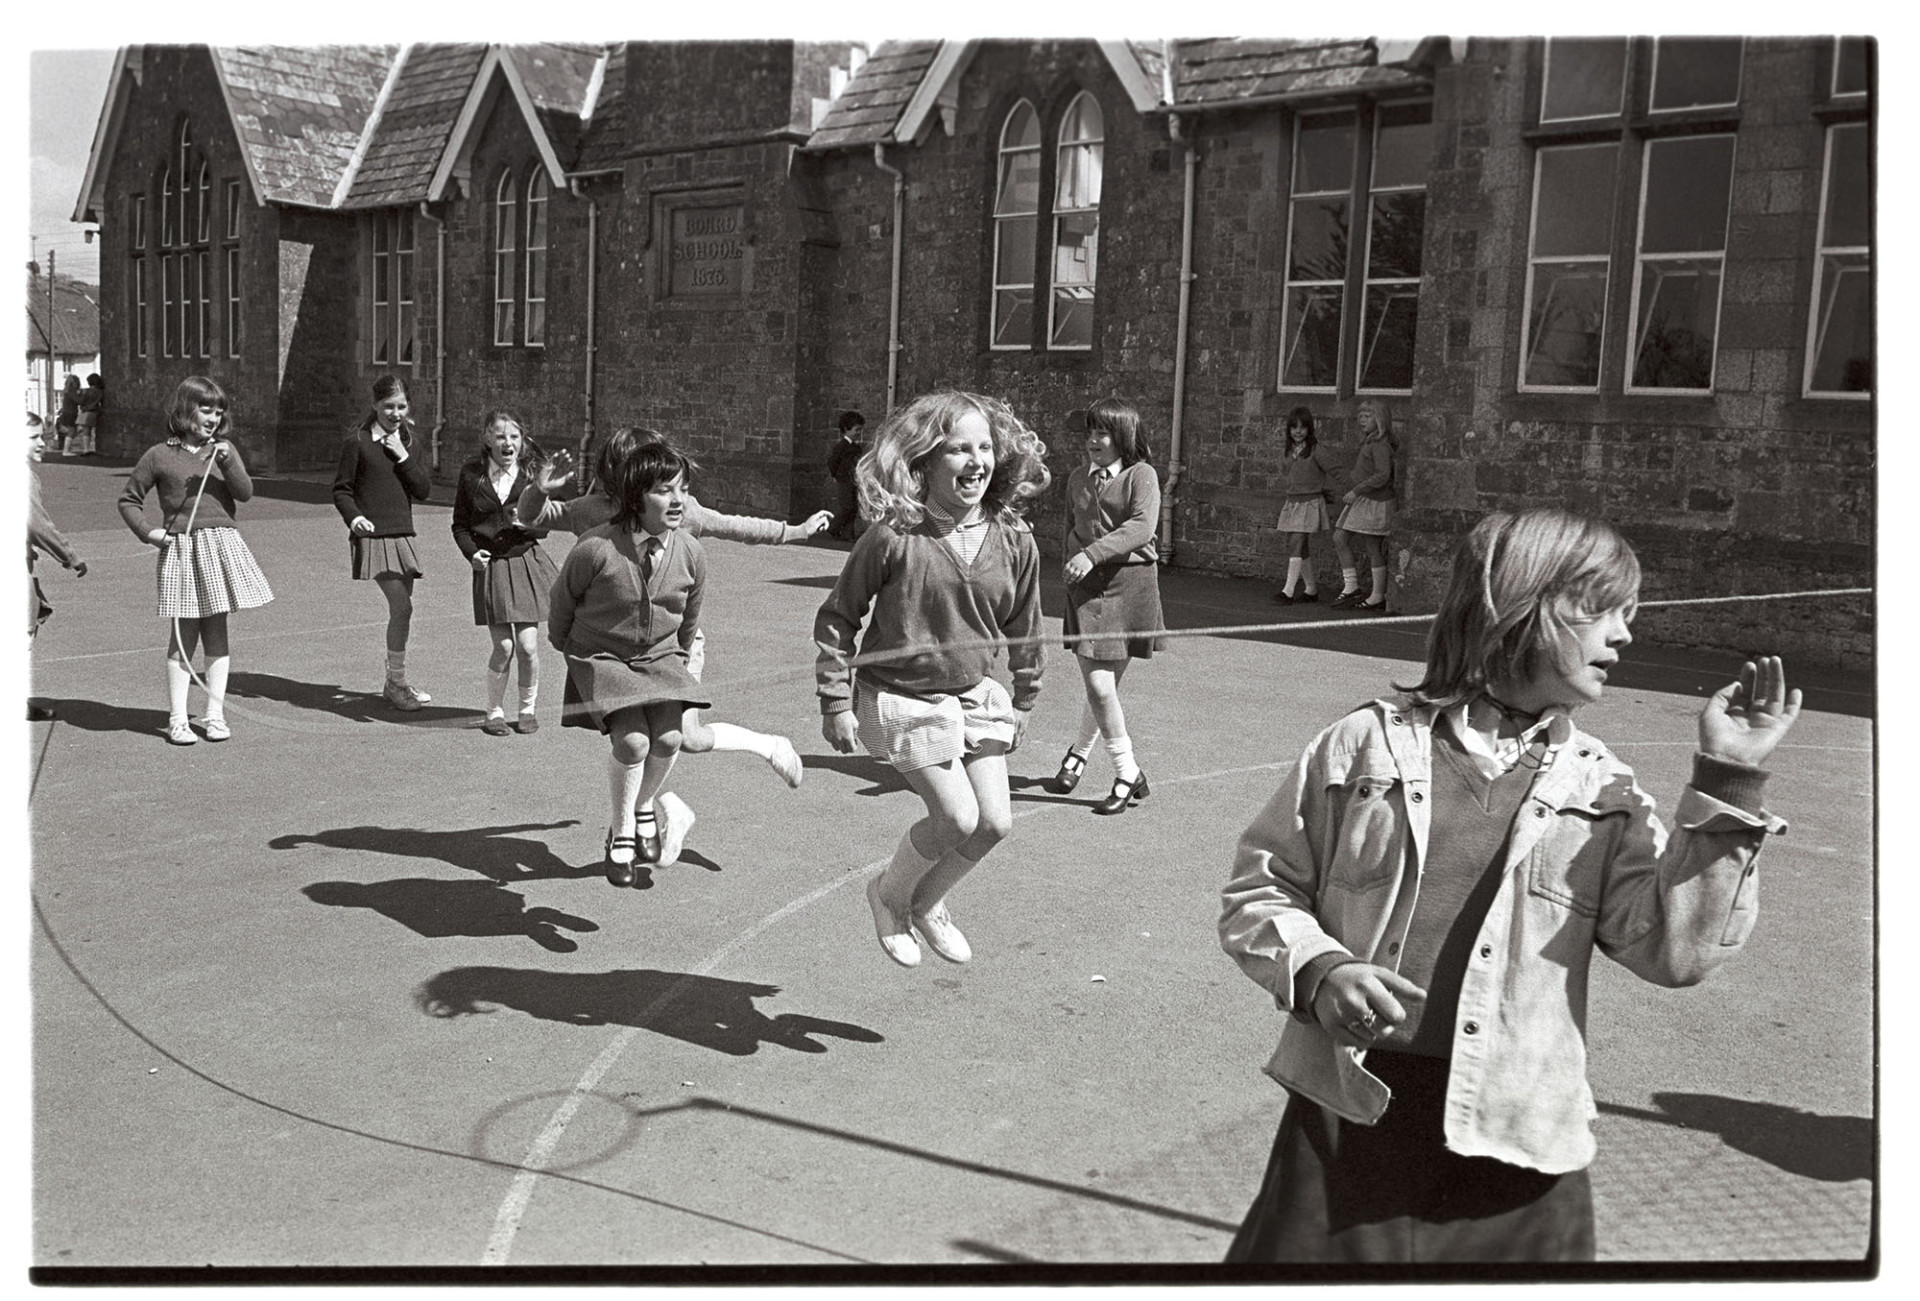 Schoolchildren skipping in the playground by James Ravilious